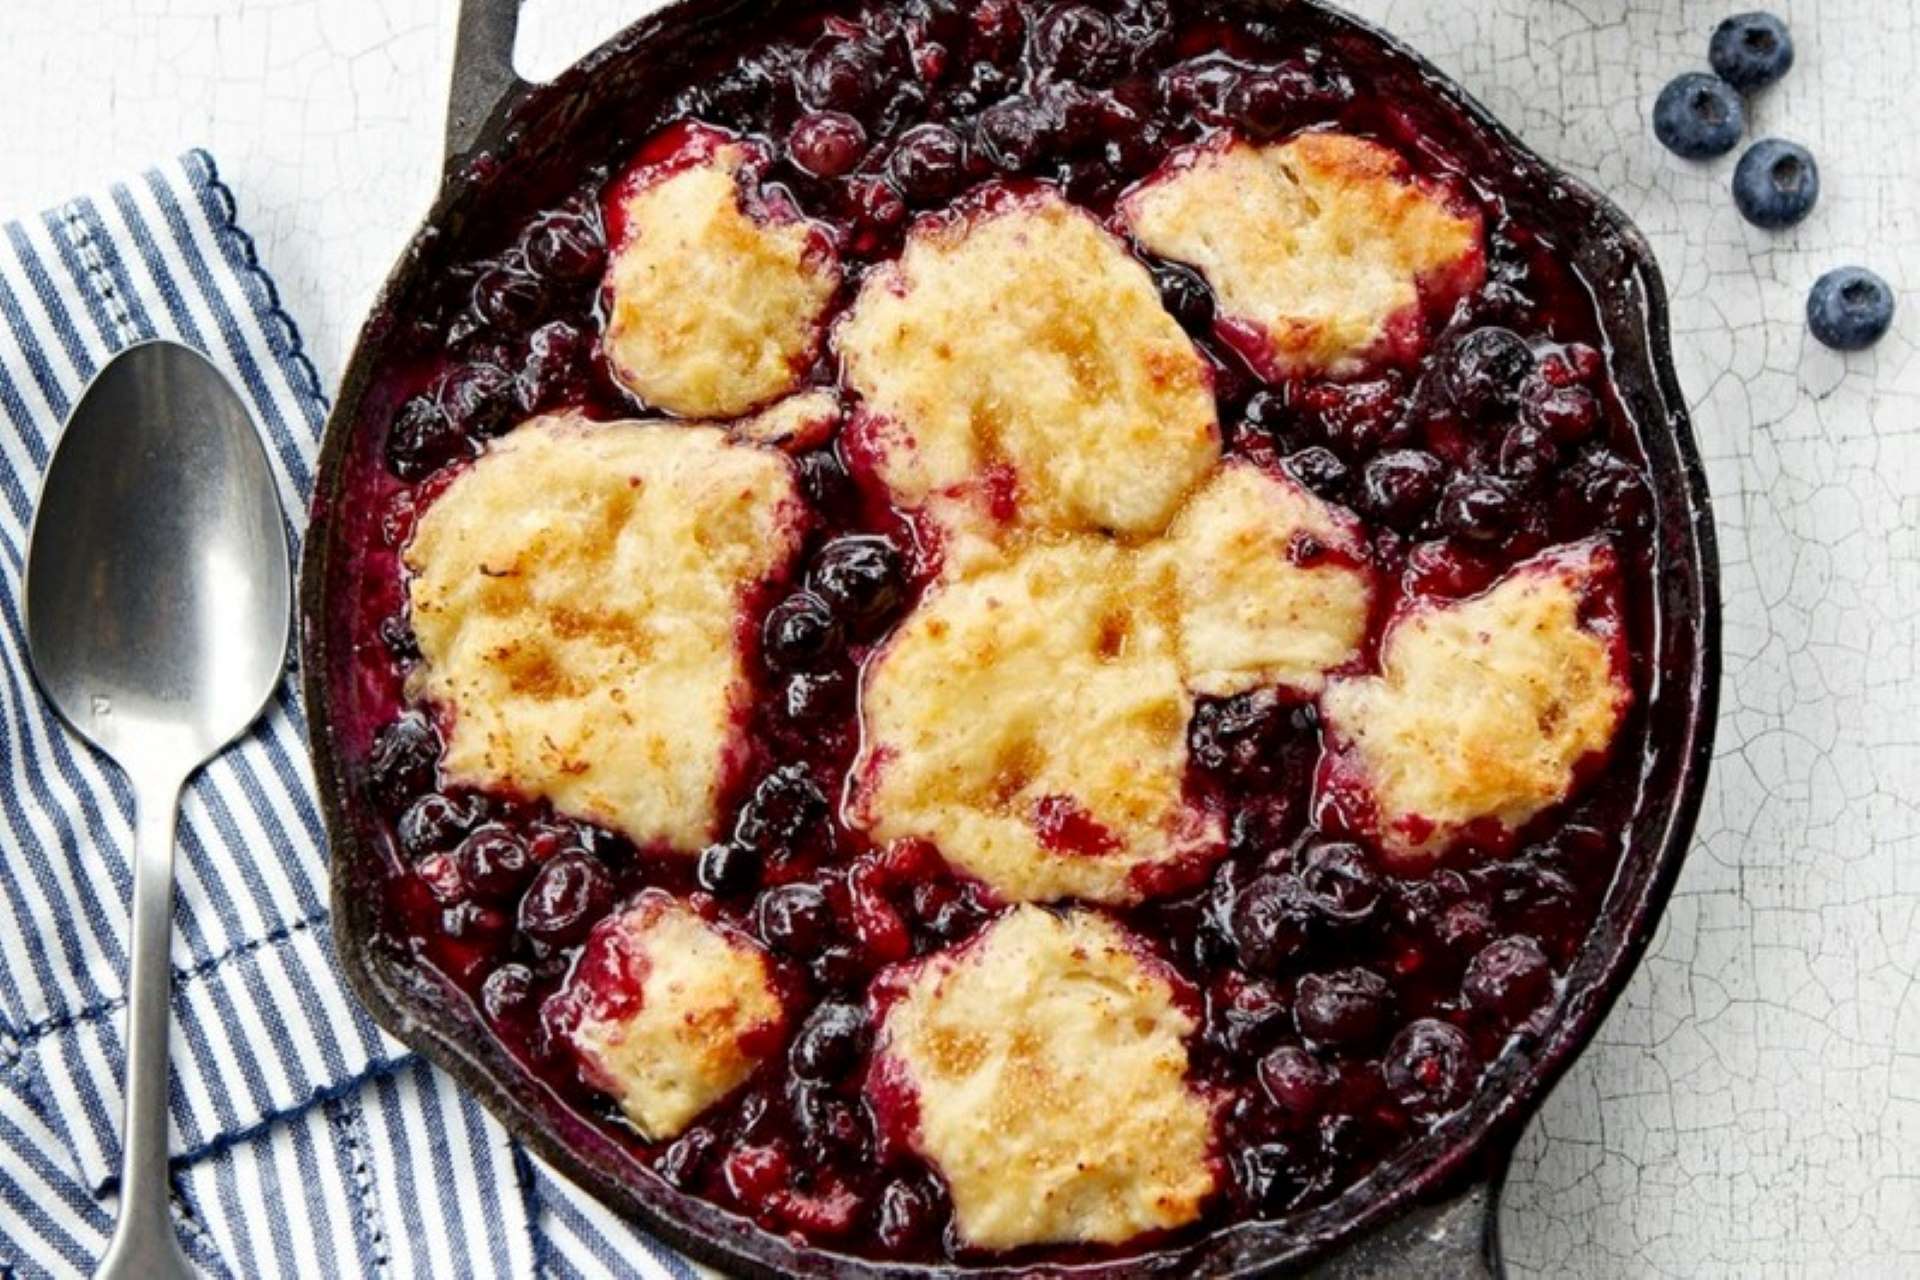 summer dessert recipes with berries